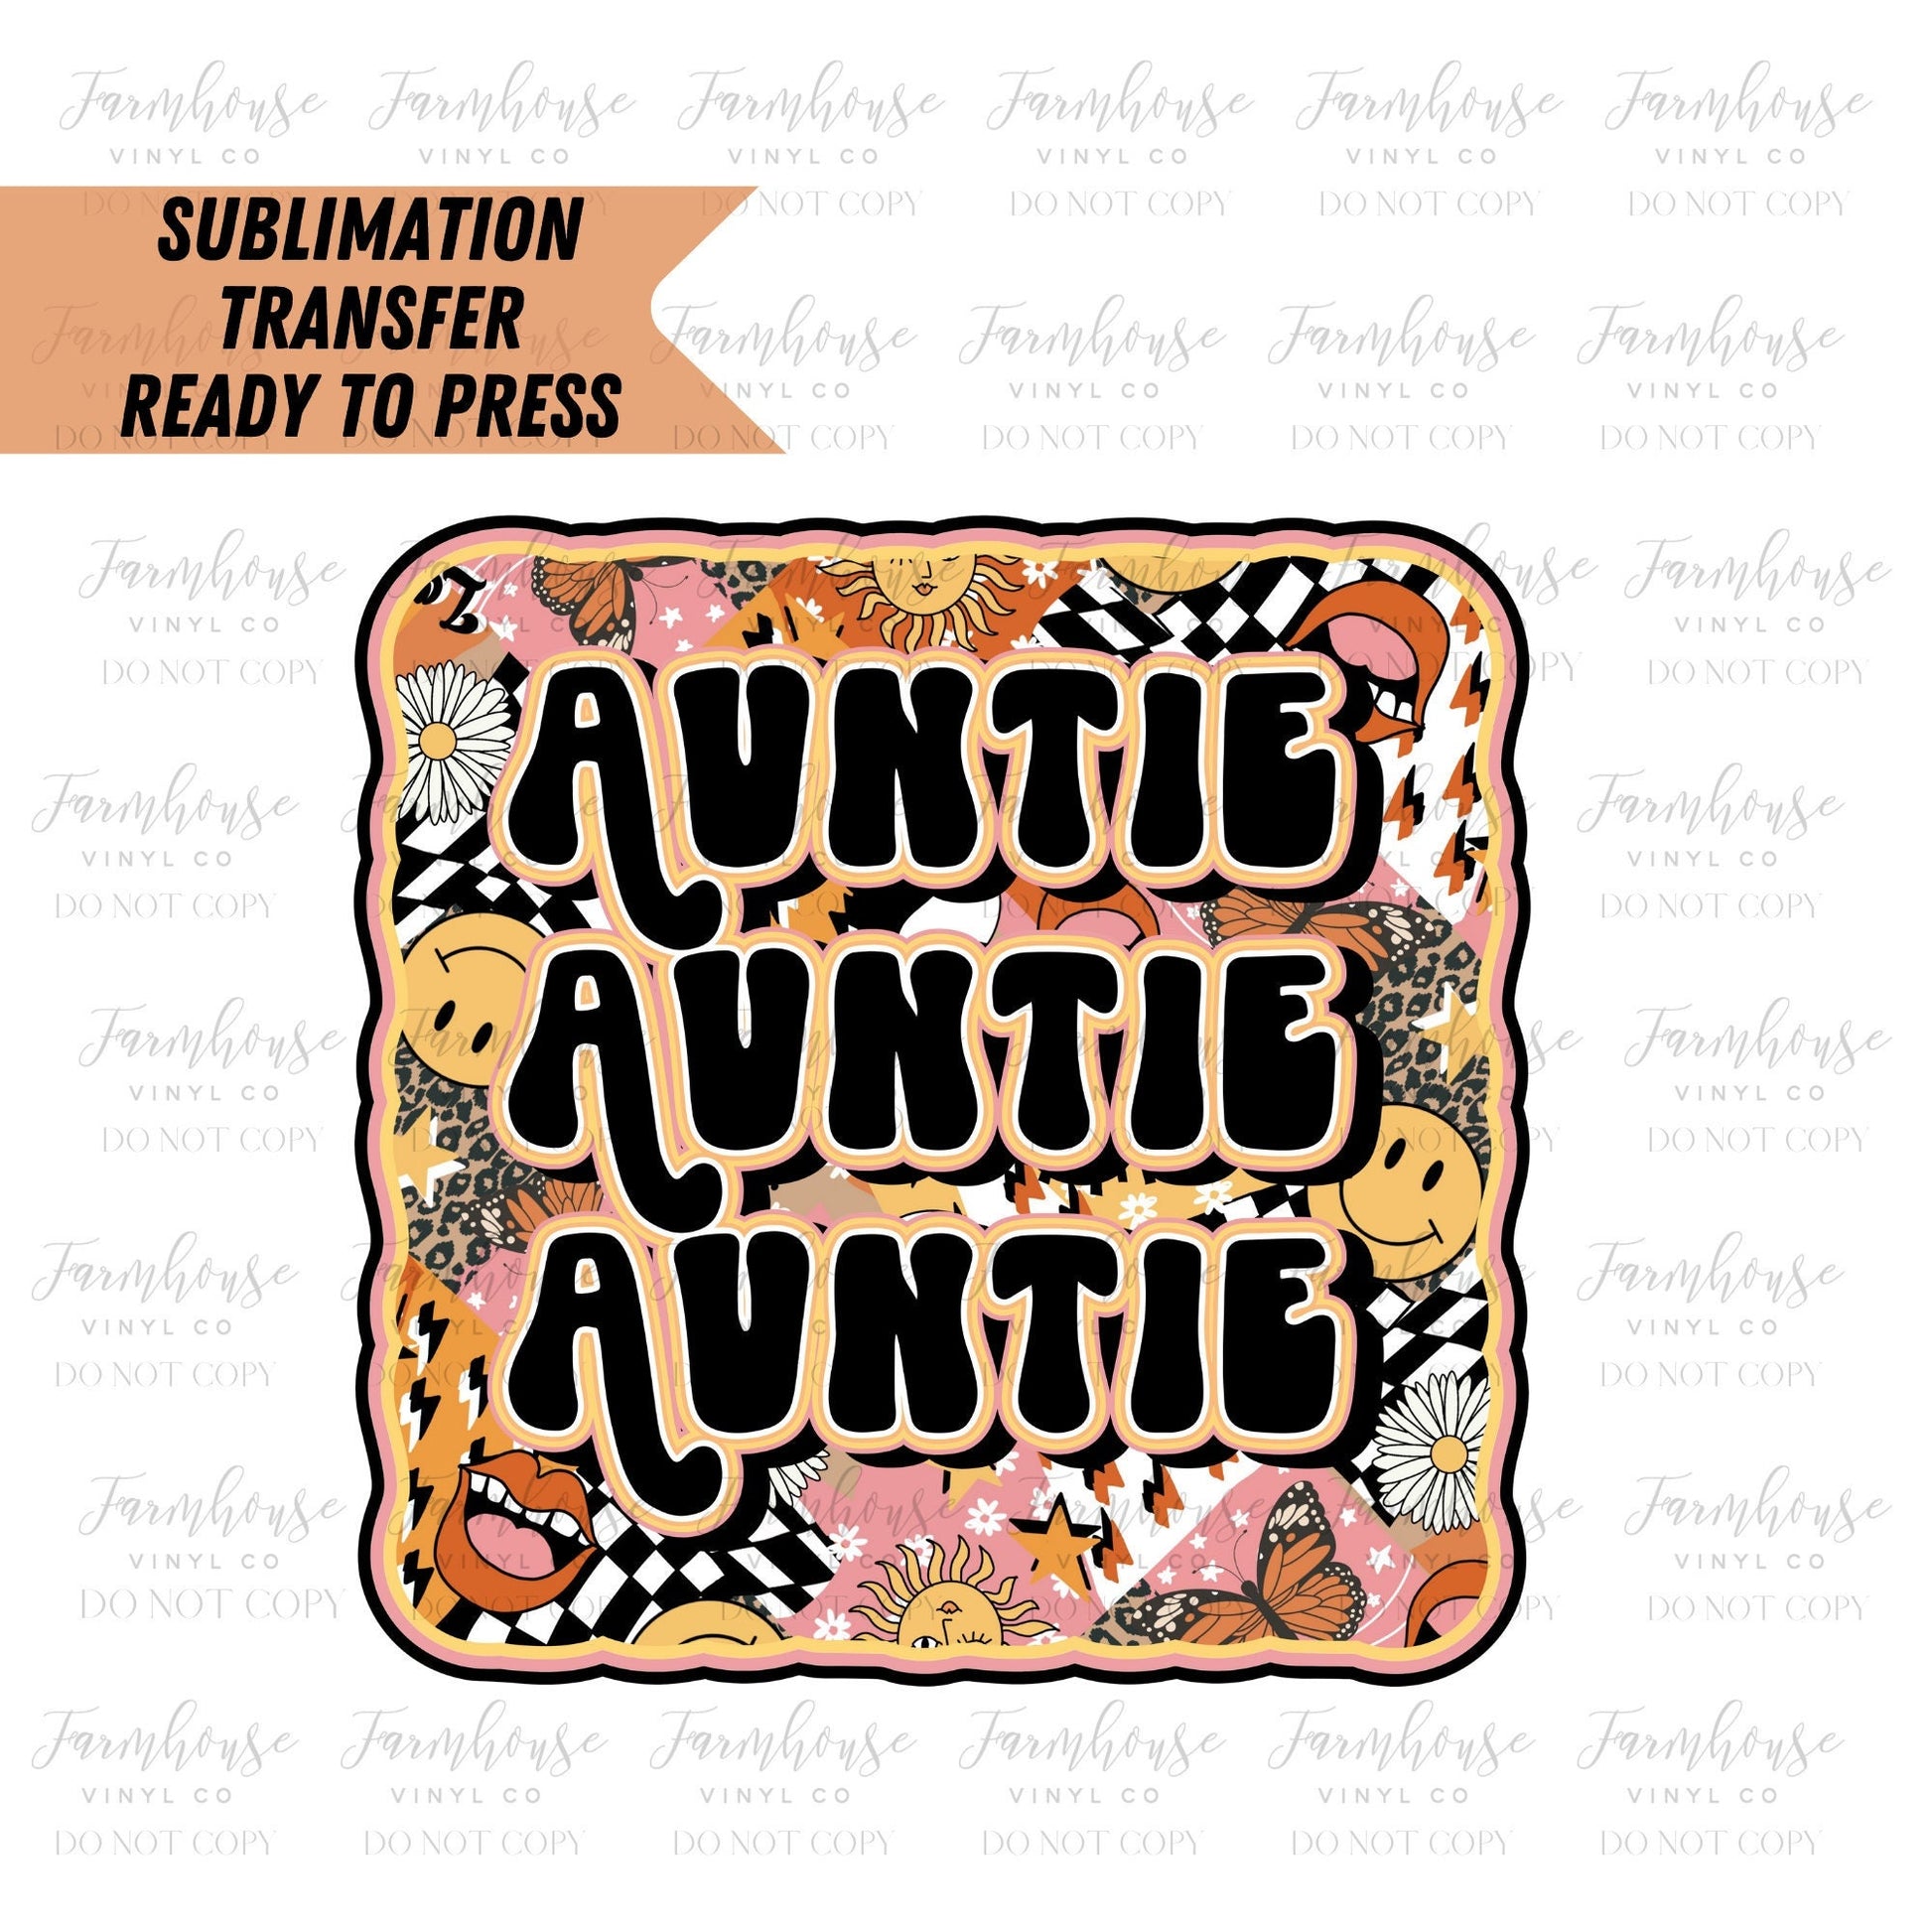 Auntie Retro Rock Smiley Face Ready to Press Sublimation Transfer - Farmhouse Vinyl Co